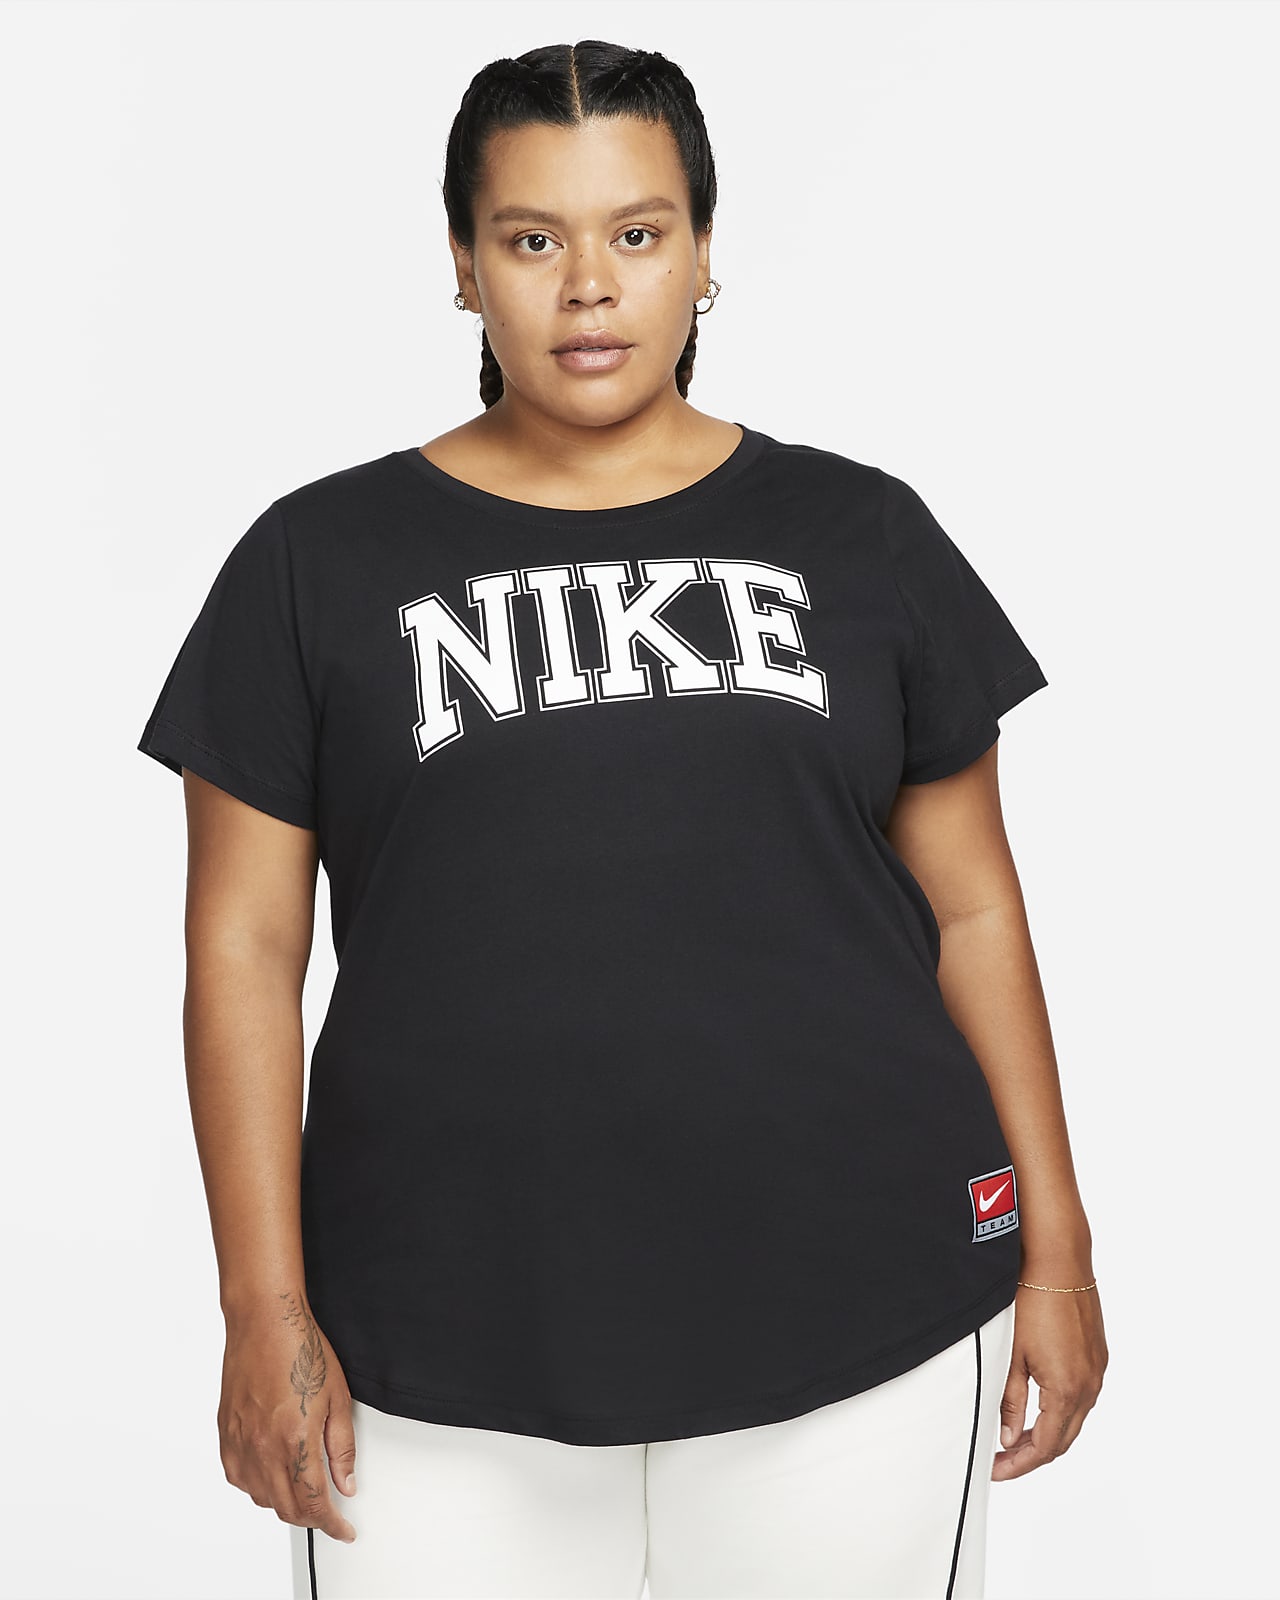 Women's T-Shirt (Plus Size). Nike.com